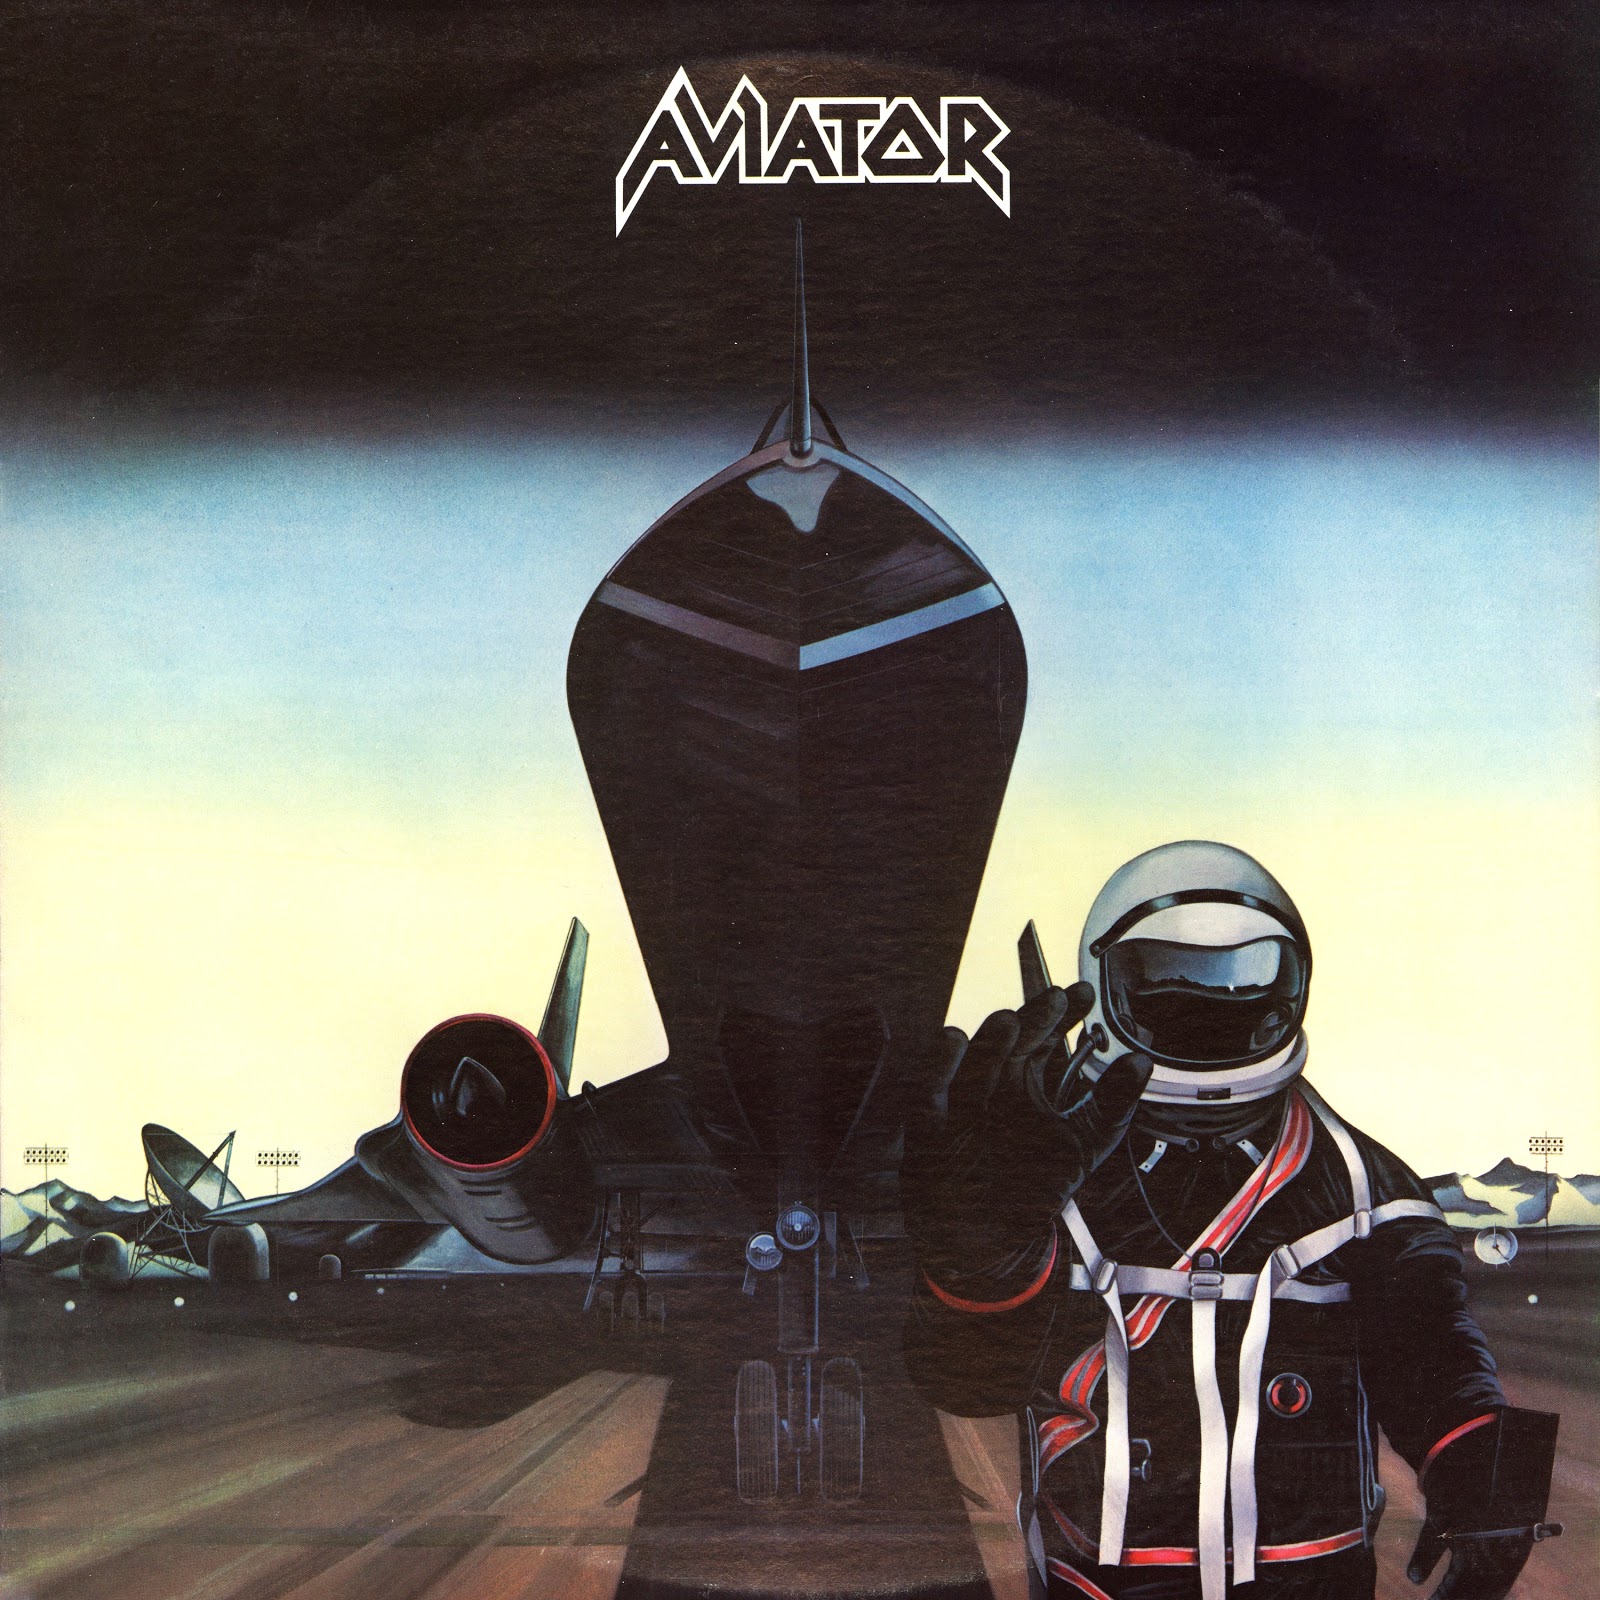 Слушать аудиокнигу авиатор полностью. Aviator - Aviator (1979). Aviator 1986 Aviator. Aviator 1979 альбом. Aviator - 1980 - Turbulence.